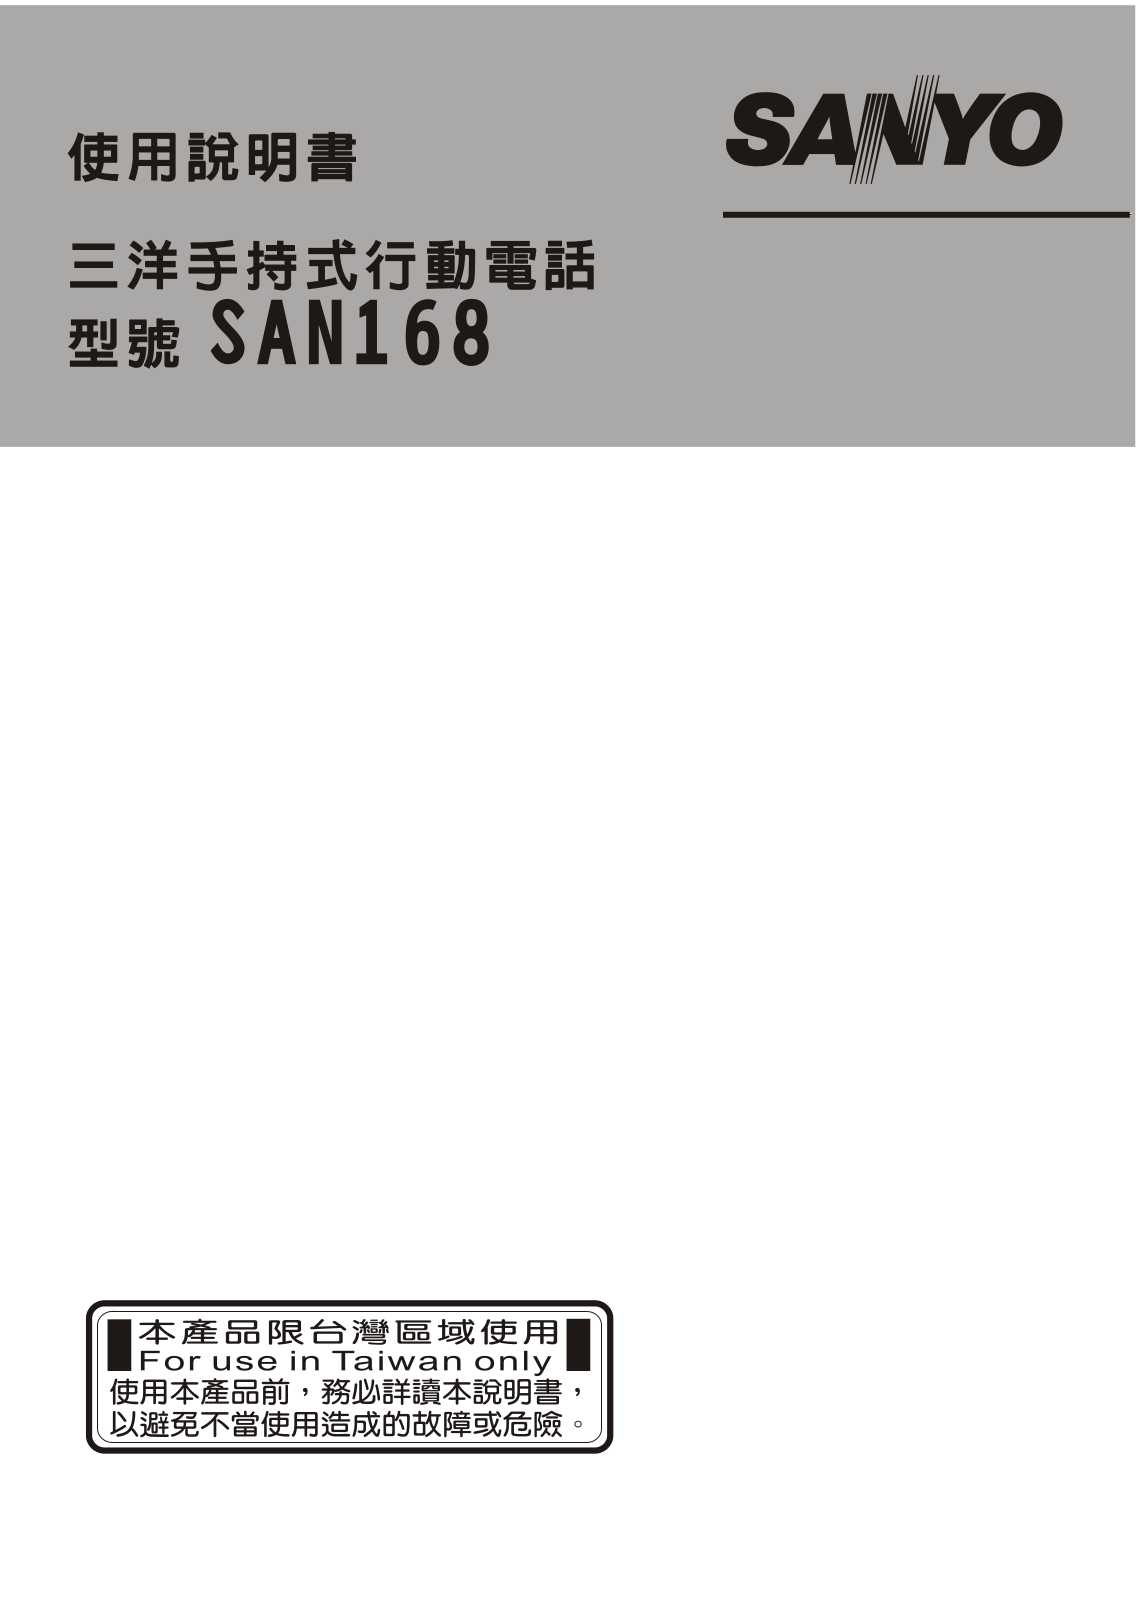 SANYO SAN168 User Manual